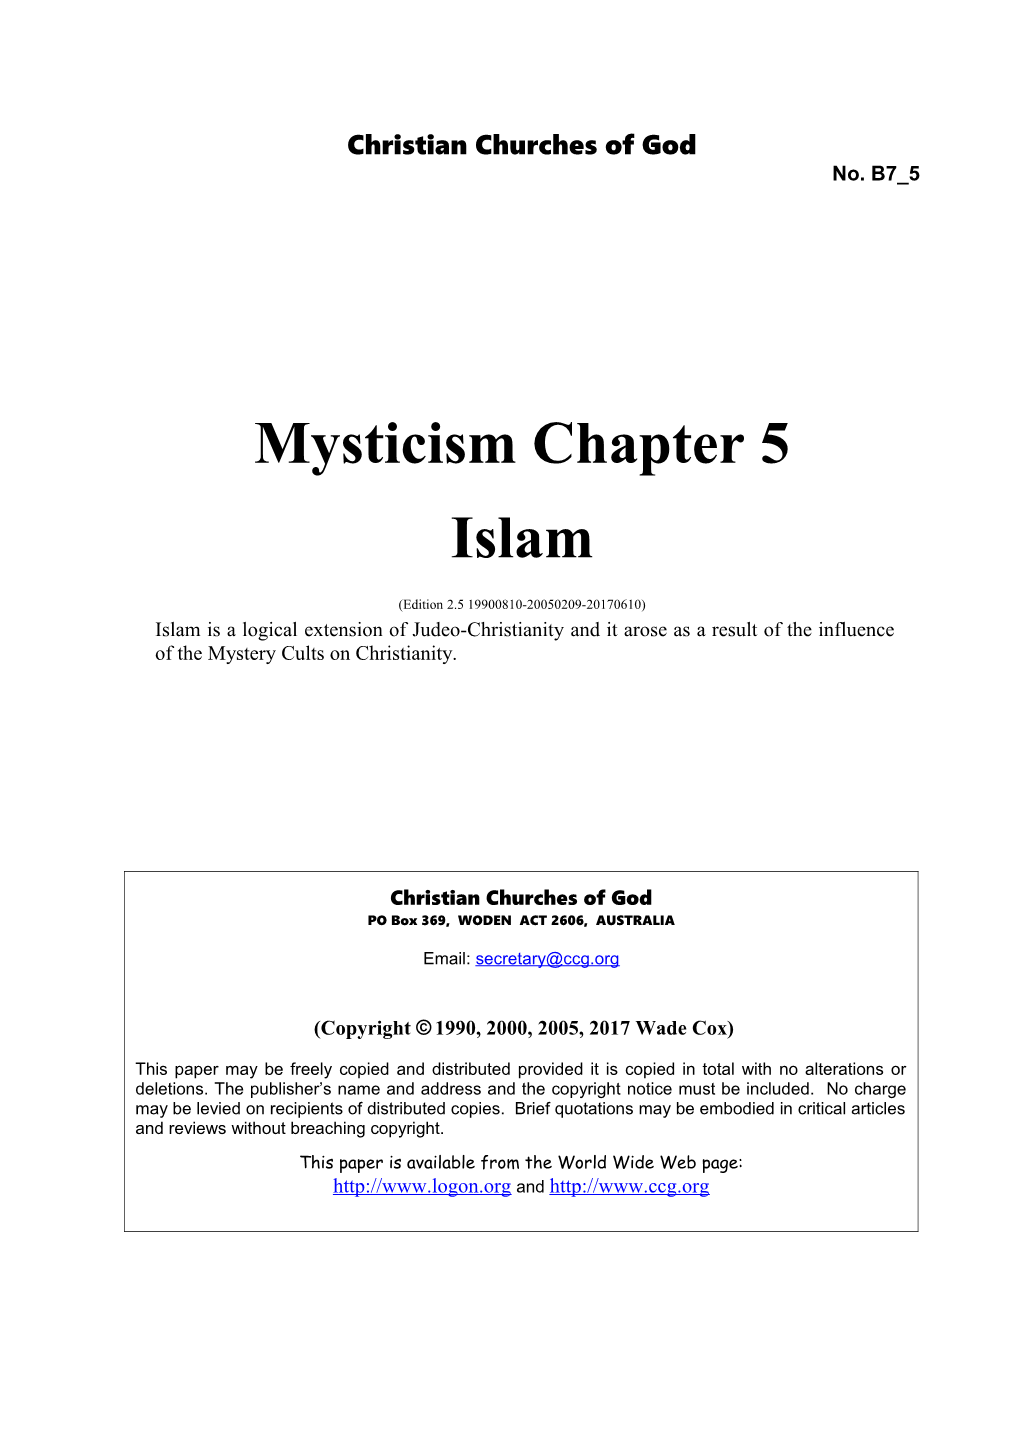 Mysticism Chapter 5 Islam (No. B7 5)